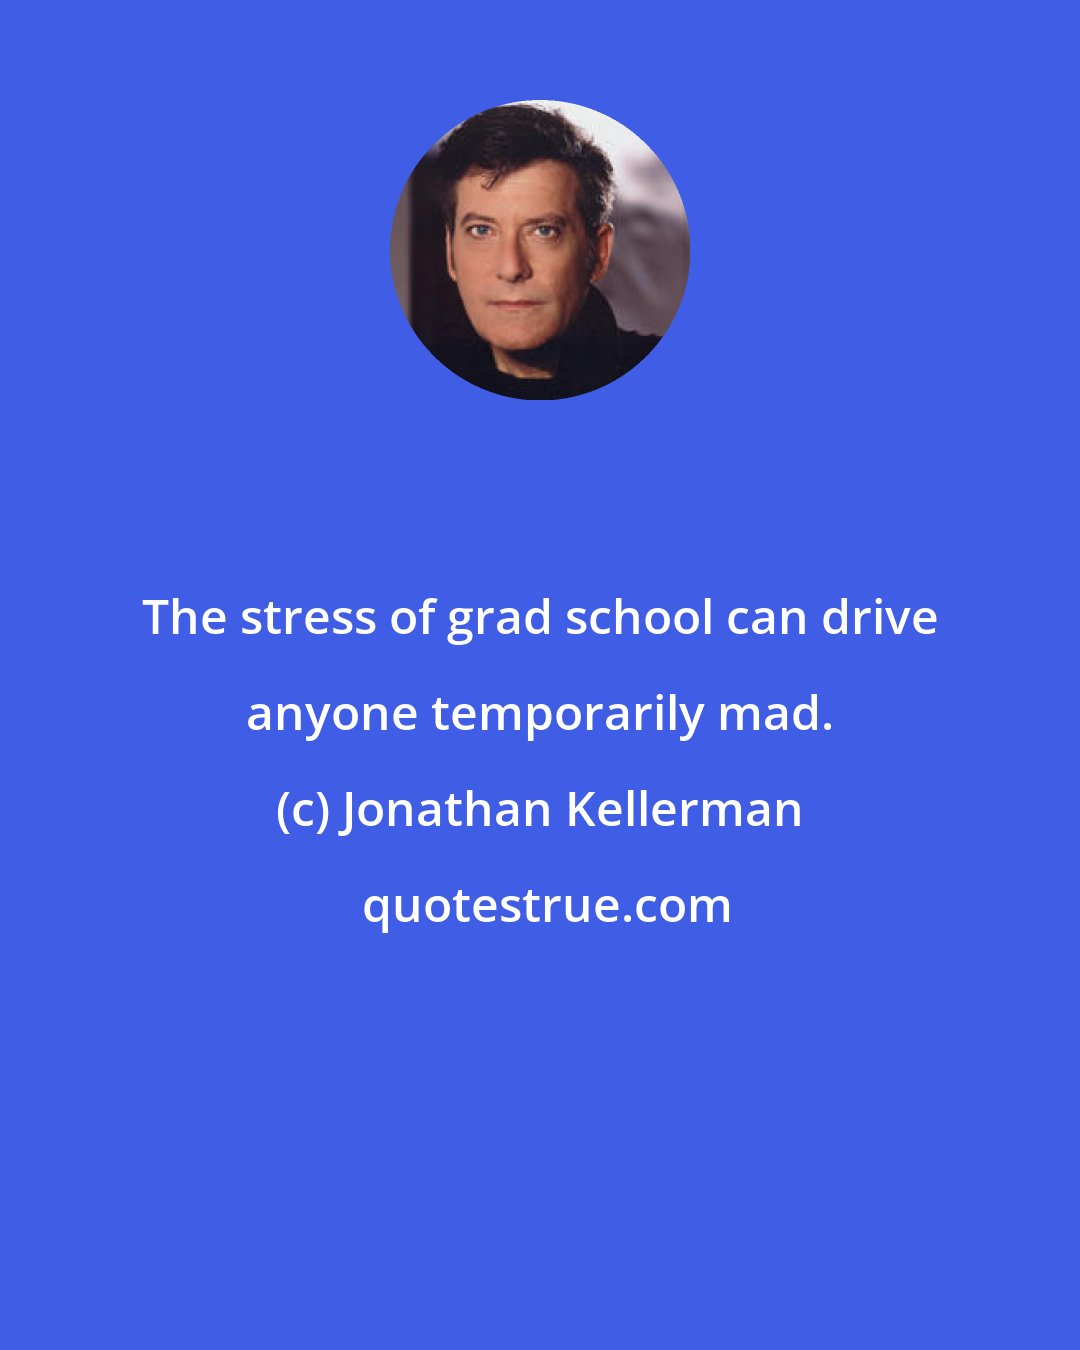 Jonathan Kellerman: The stress of grad school can drive anyone temporarily mad.